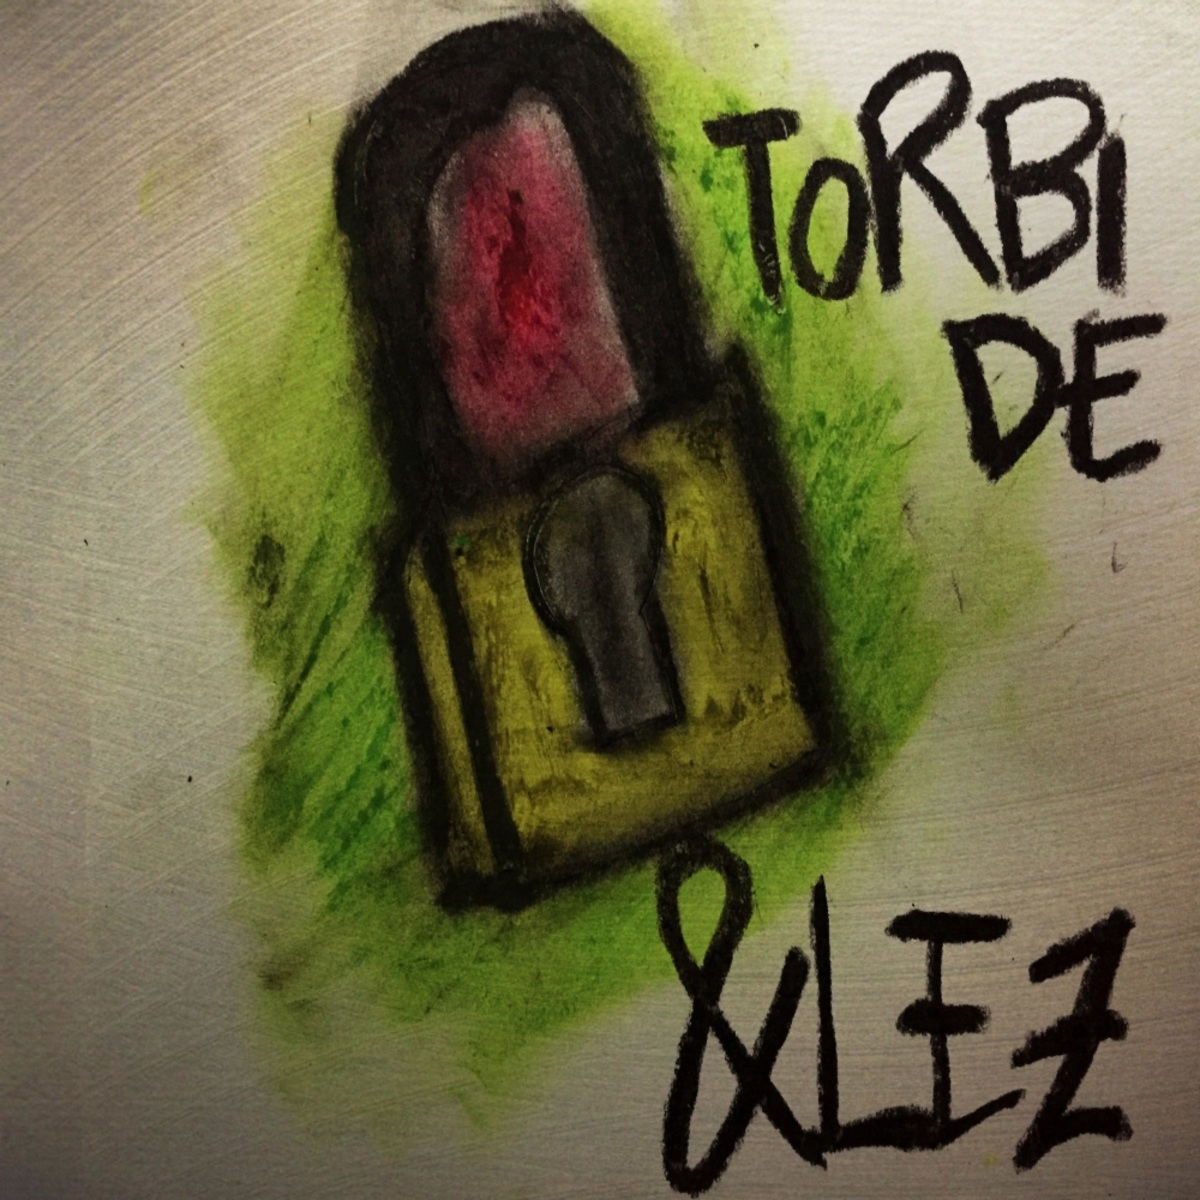 &lez - Torbide / Visile Records